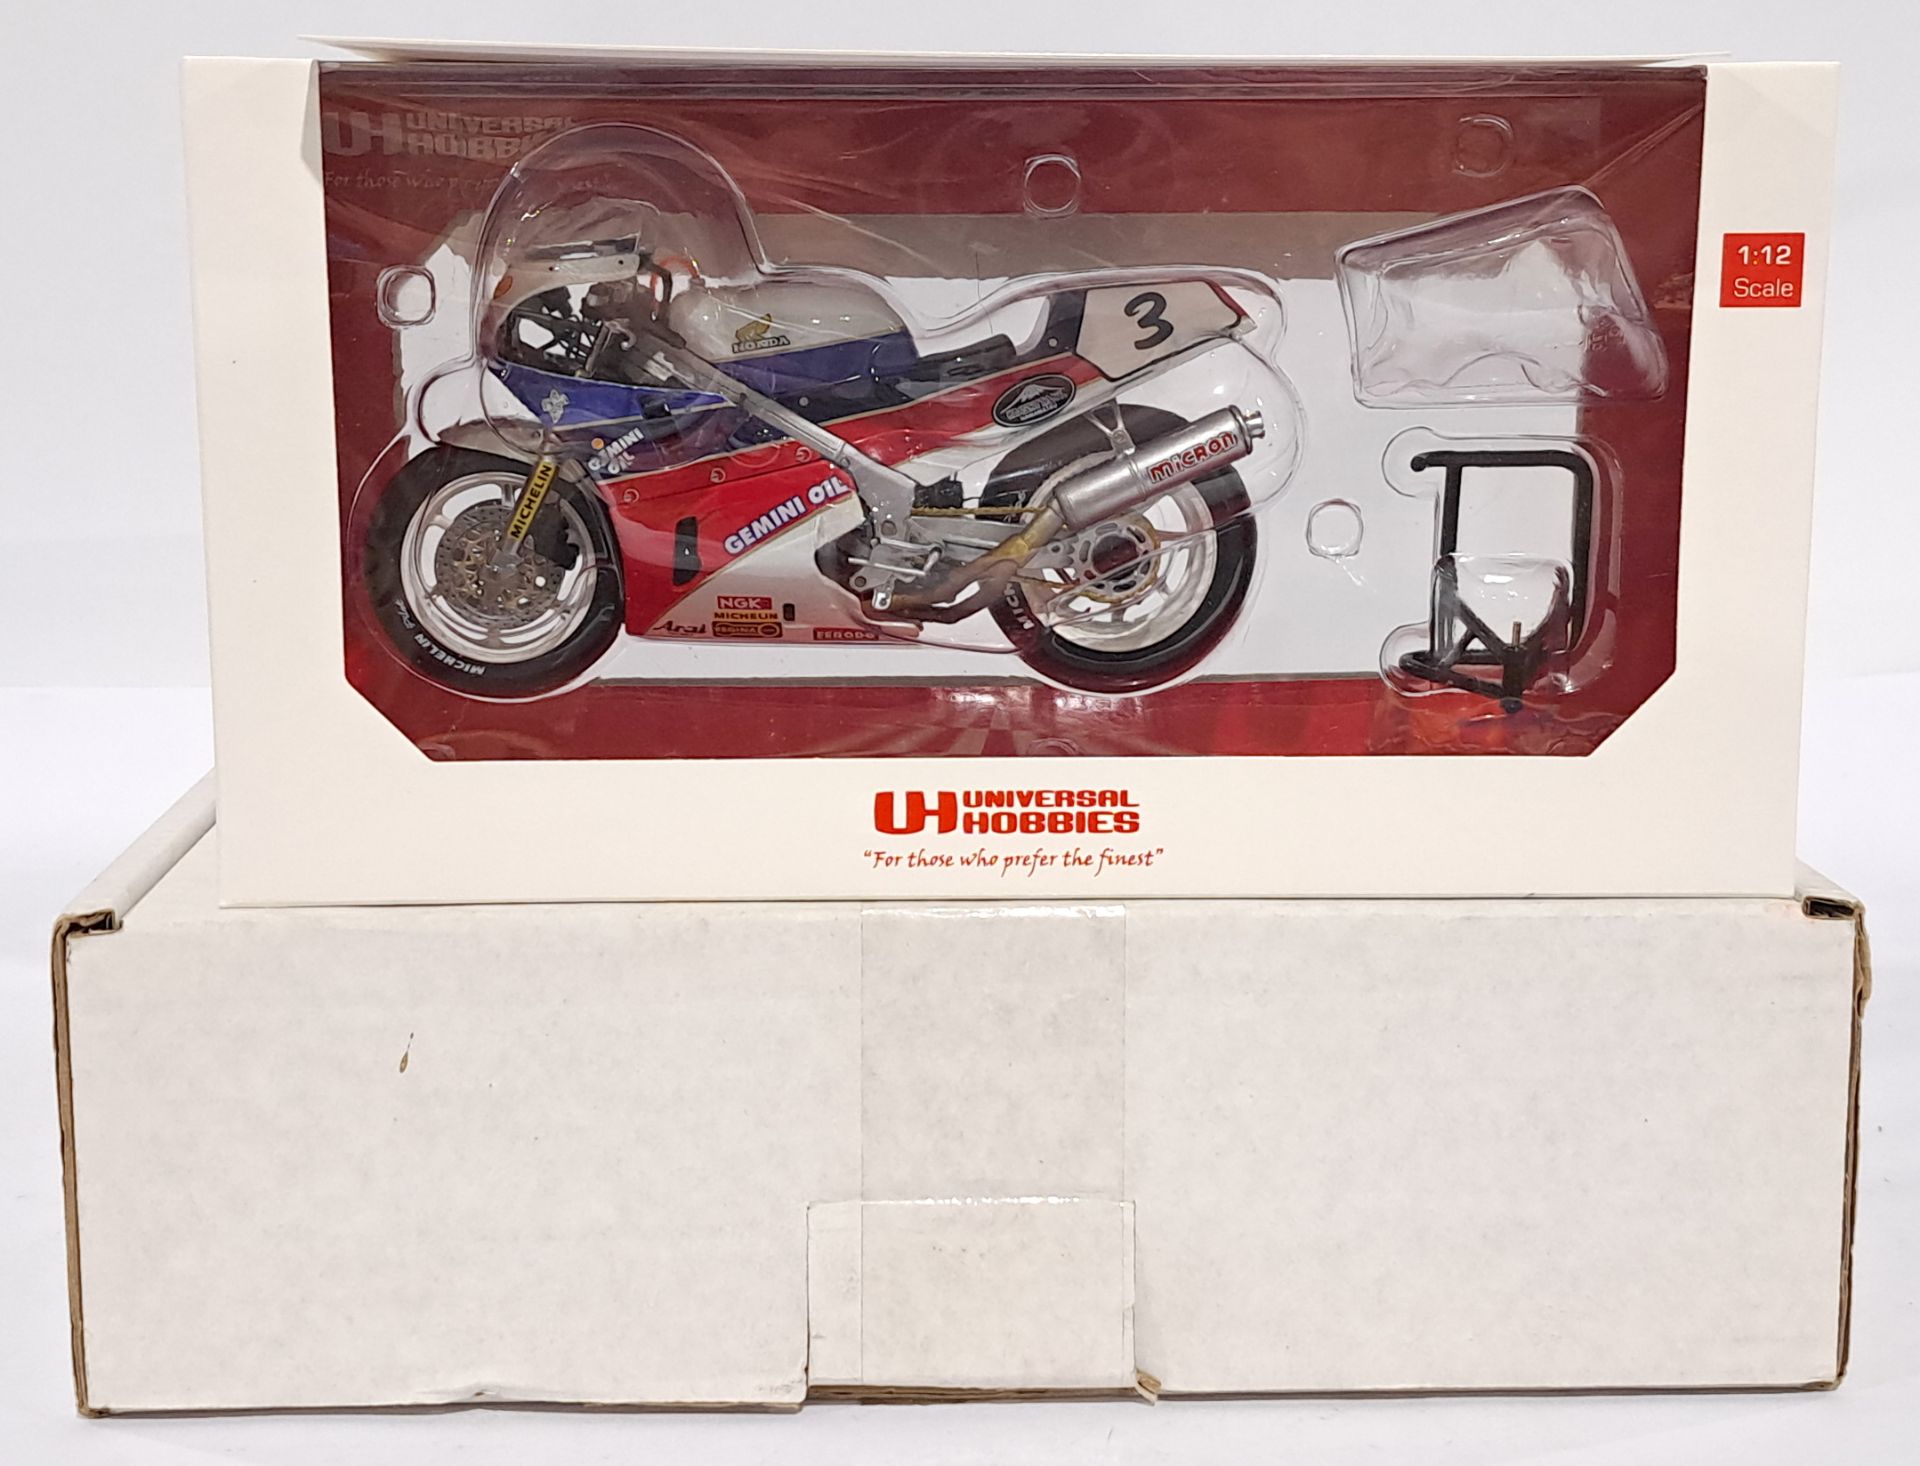 Universal Hobbies - UH4821 "Joey Dunlop" Honda RC 30 - Isle of man TT F1 Winner. Conditions gener...